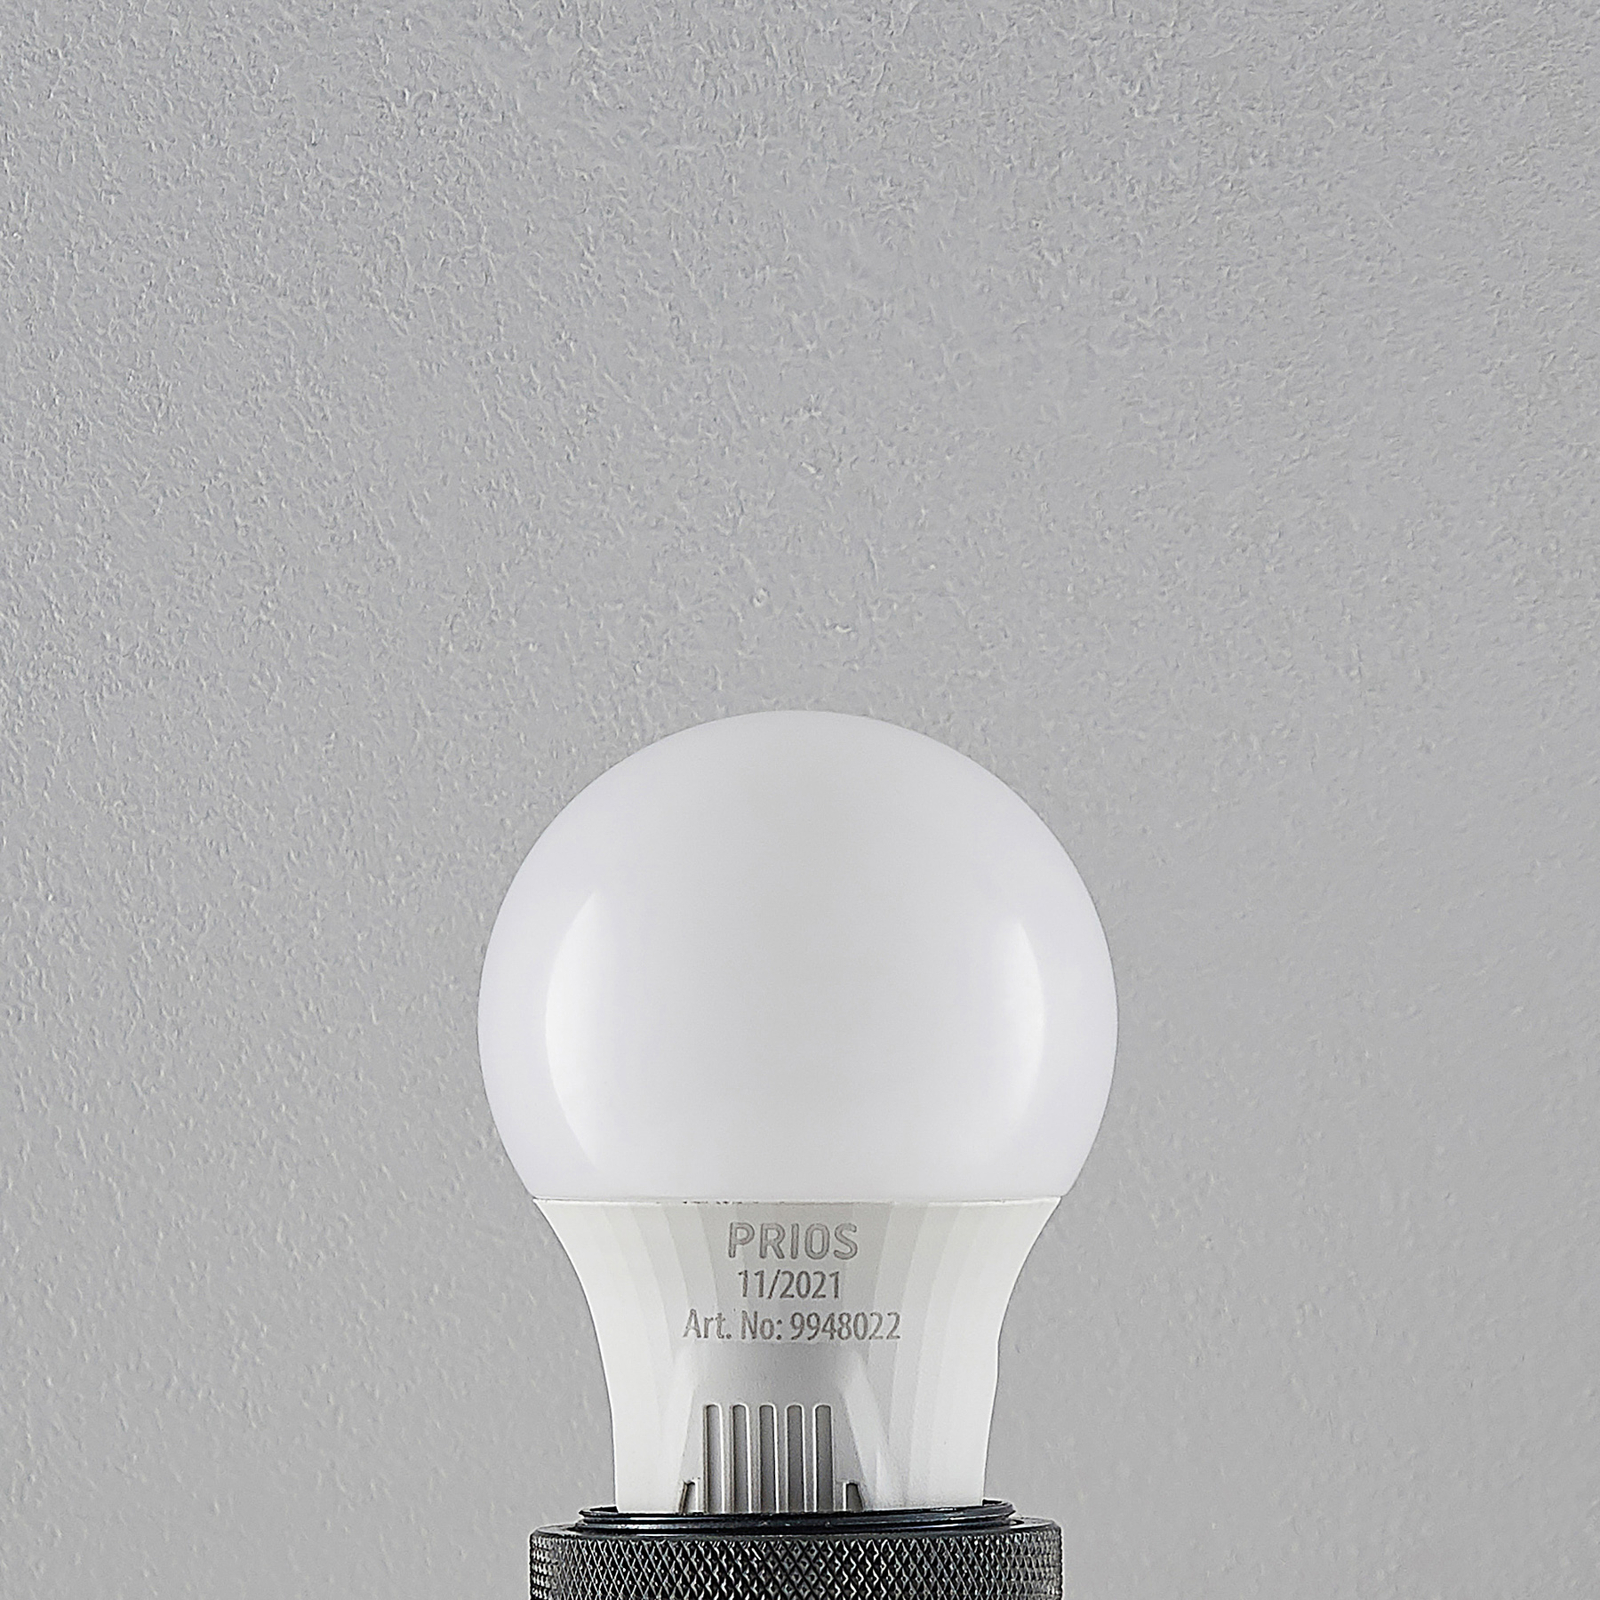 LED bulb E27 A60 7 W white 3,000 K 10-pack